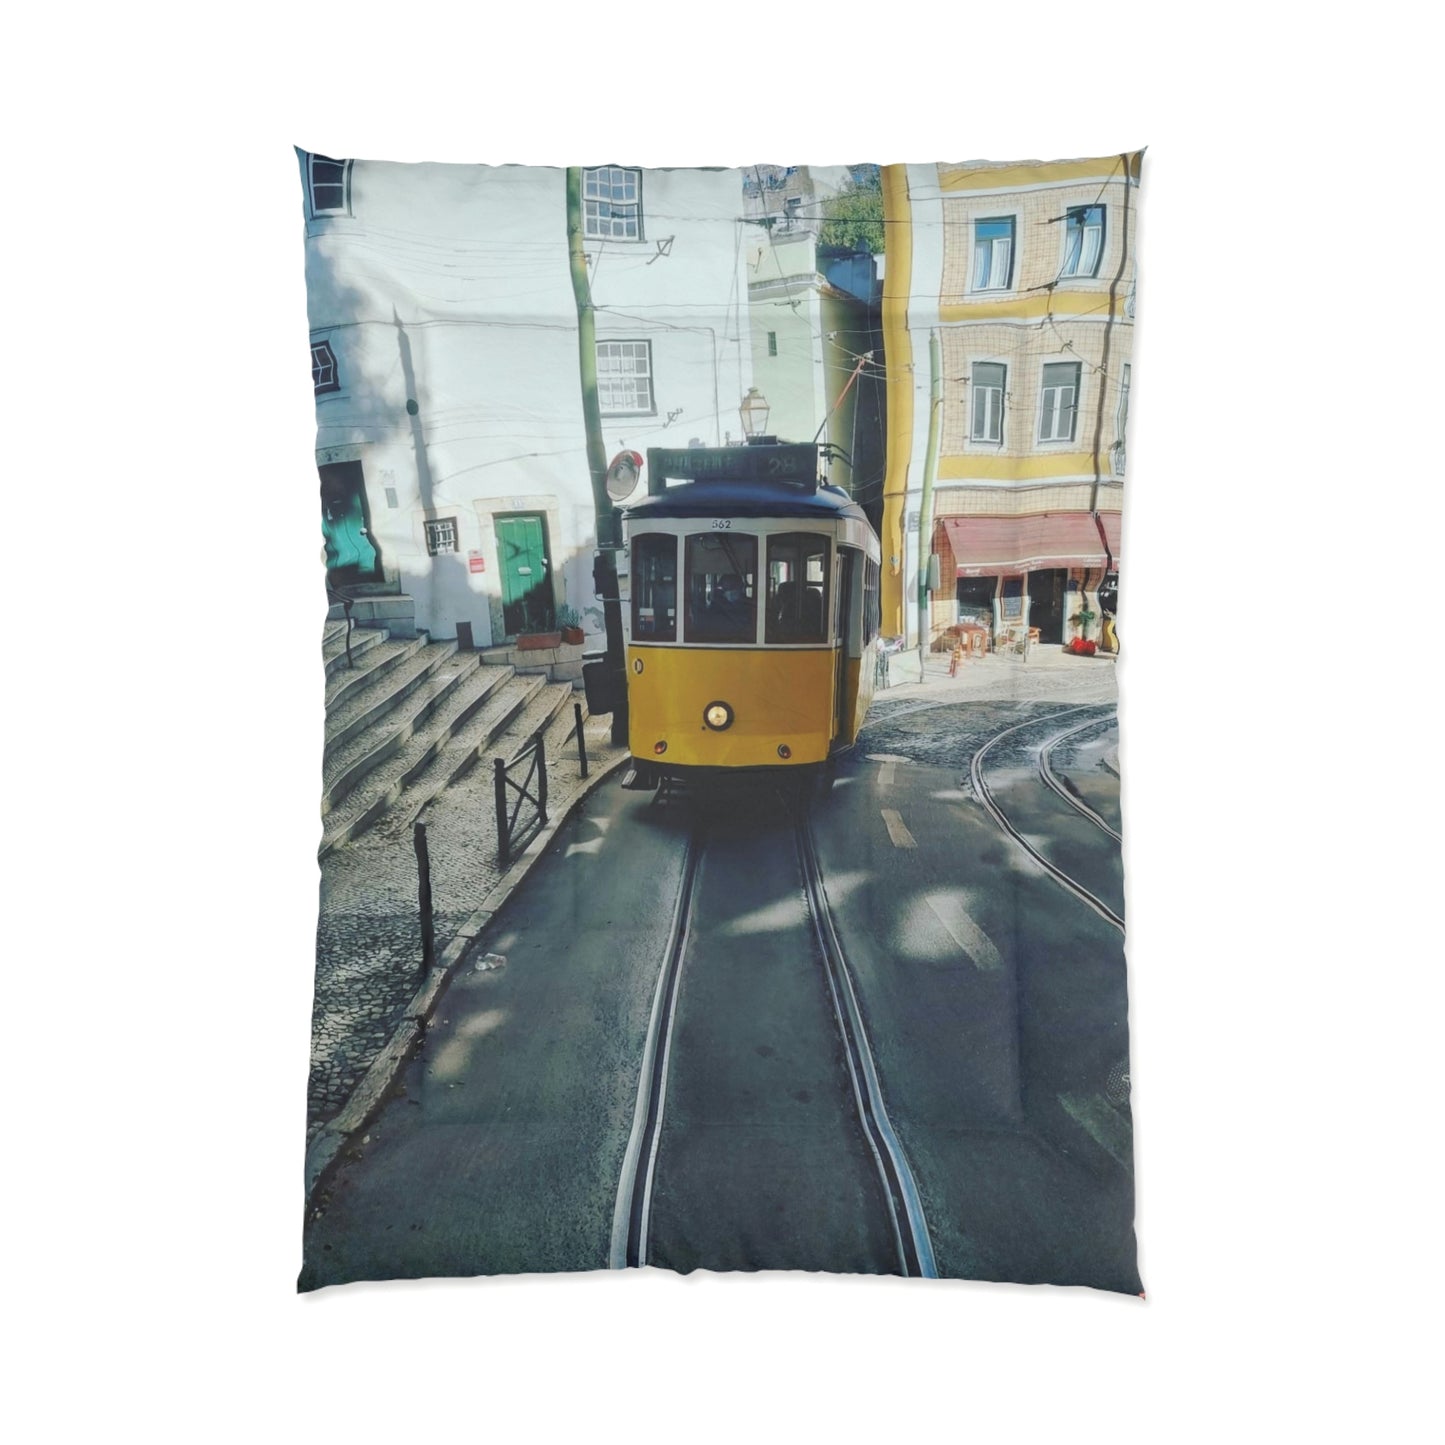 Remodelado Tram | Portugal | Comforter